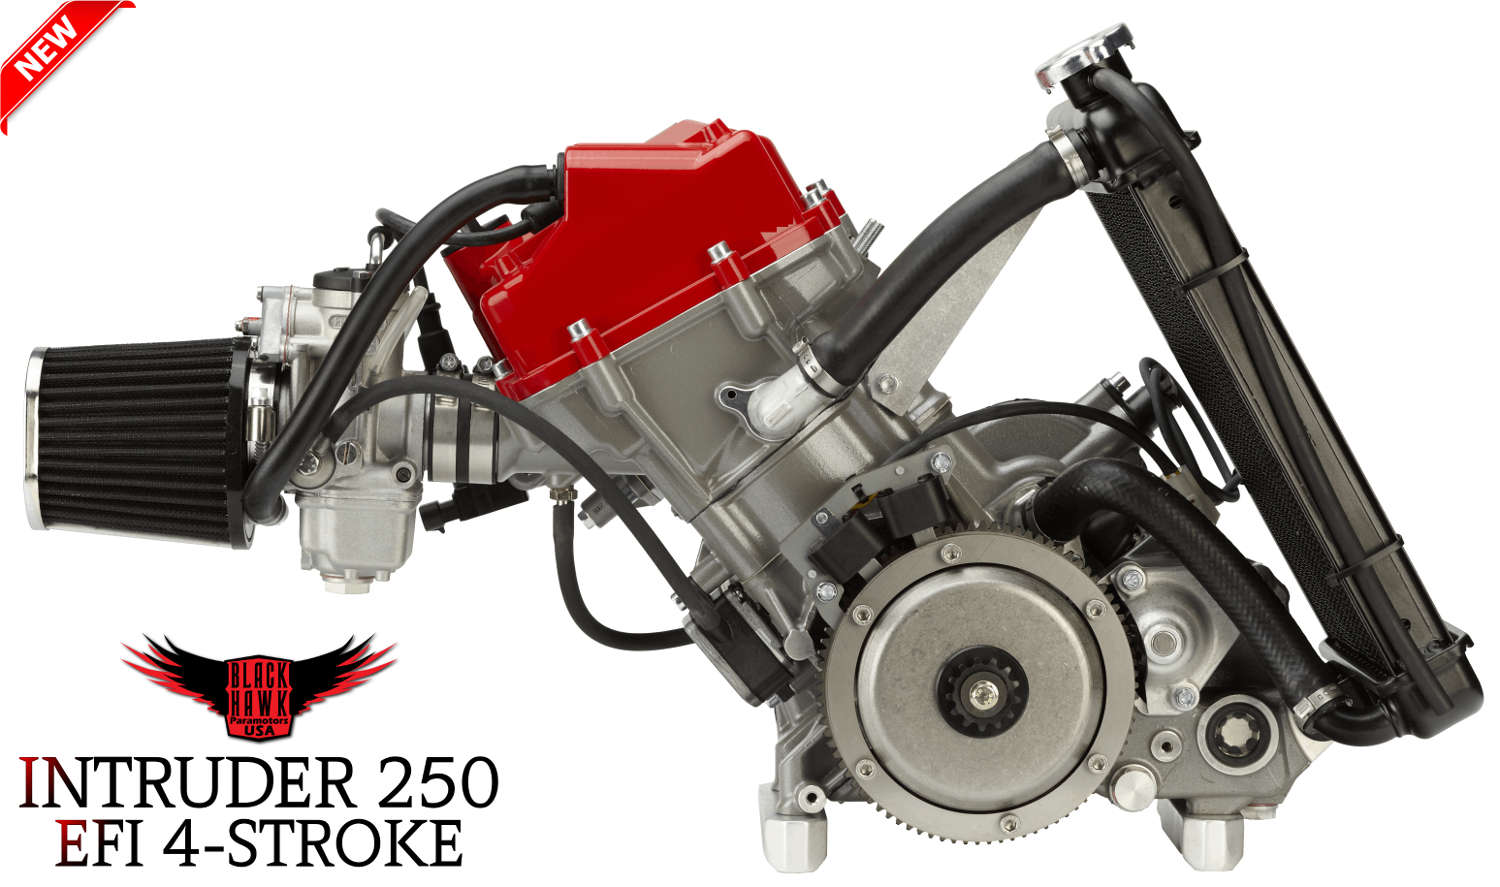 NEW 4-Stroke Paramotor With EFI! BlackHawk's INTRUDER 250 is Here! -  BlackHawk Paramotors USA